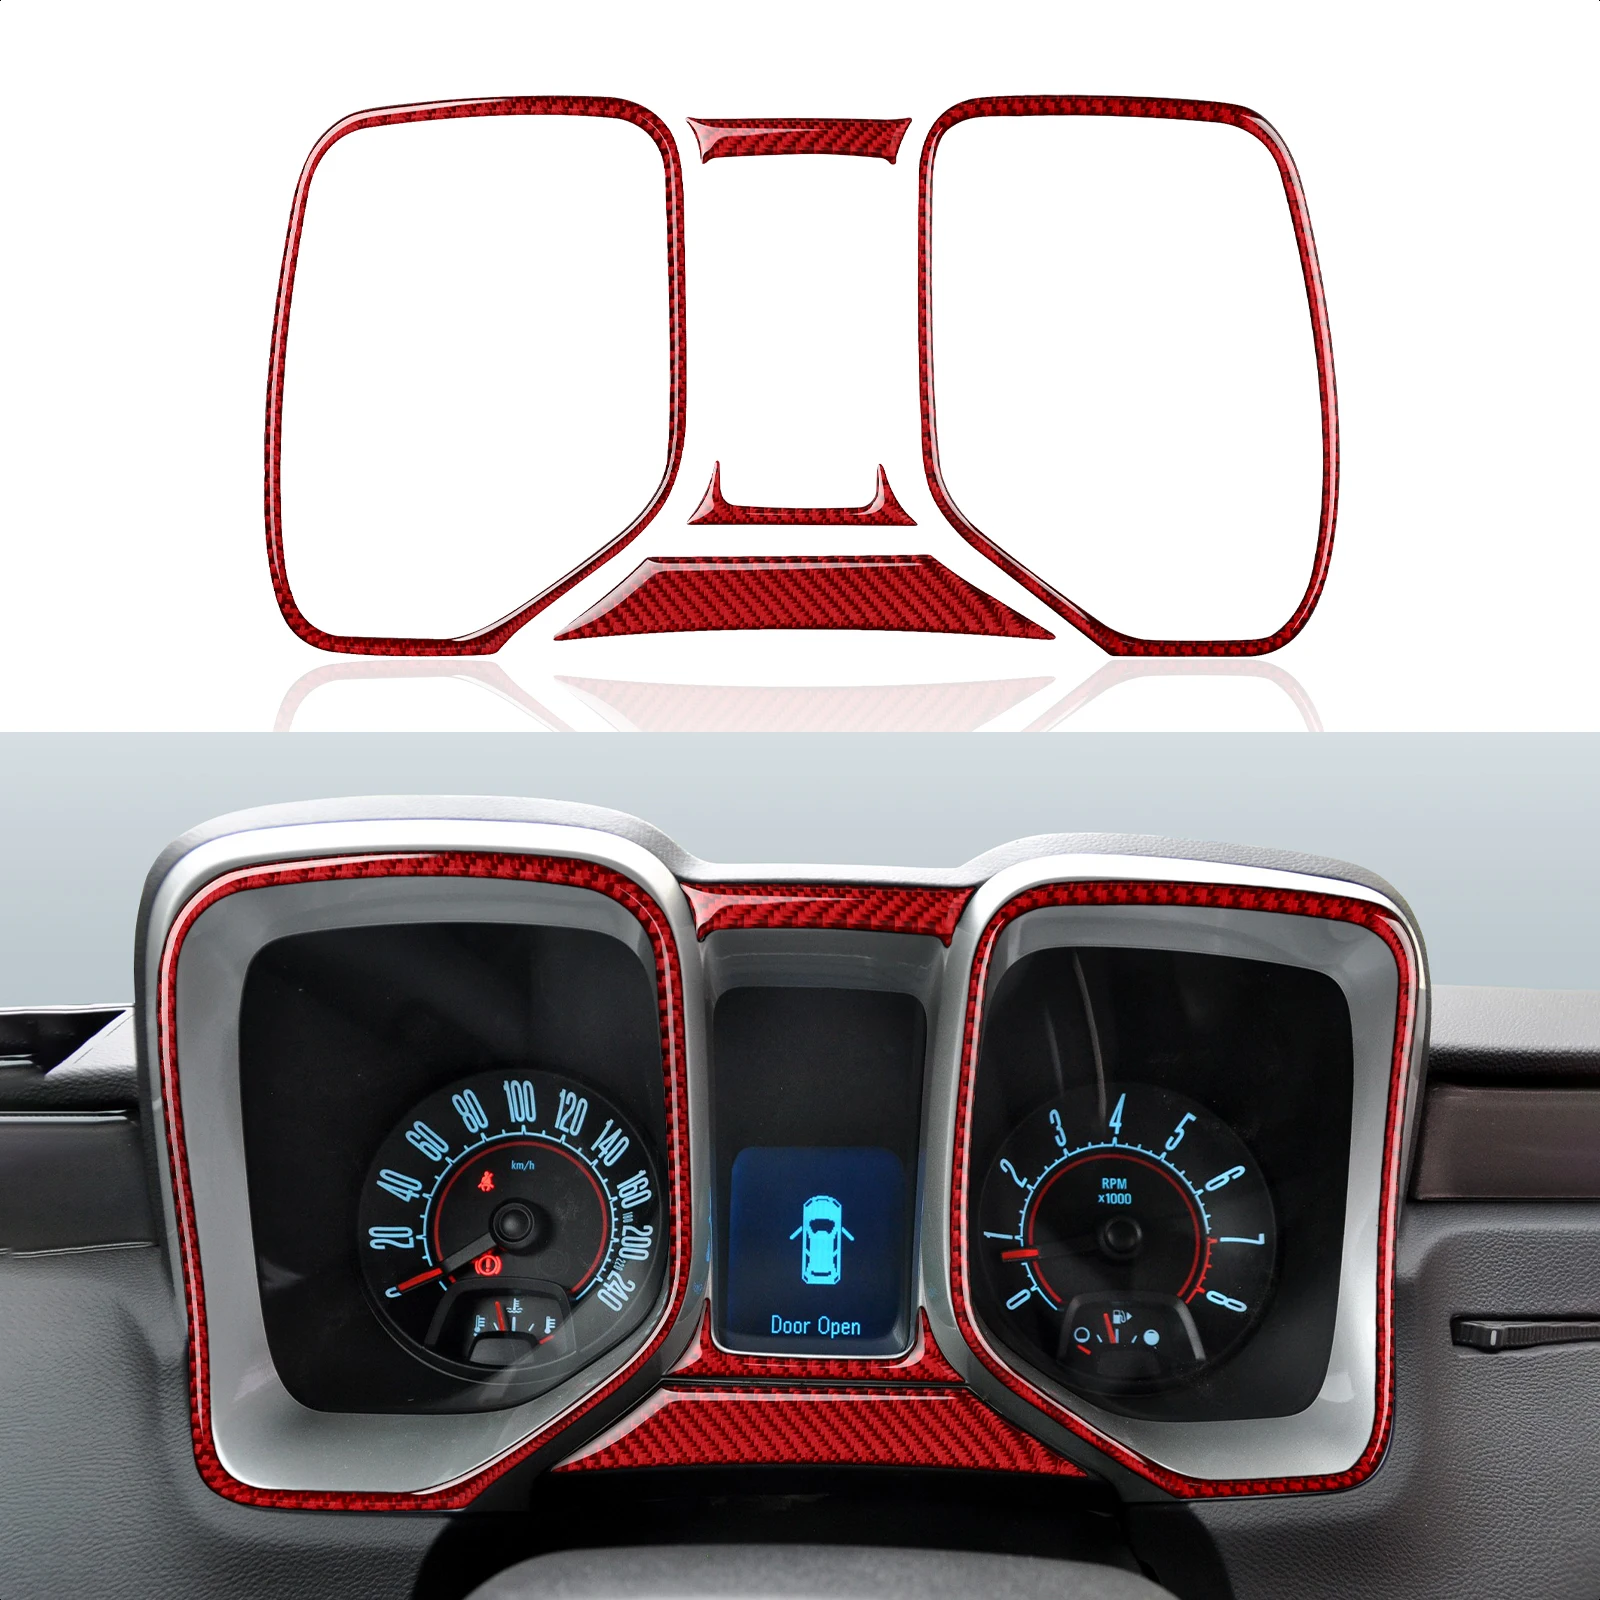 

Car Speedometer Frame Carbon Fiber Interior Trim Cover Decal for Chevrolet Camaro 2010 2011 2012 2013 2014 2015 Accessories